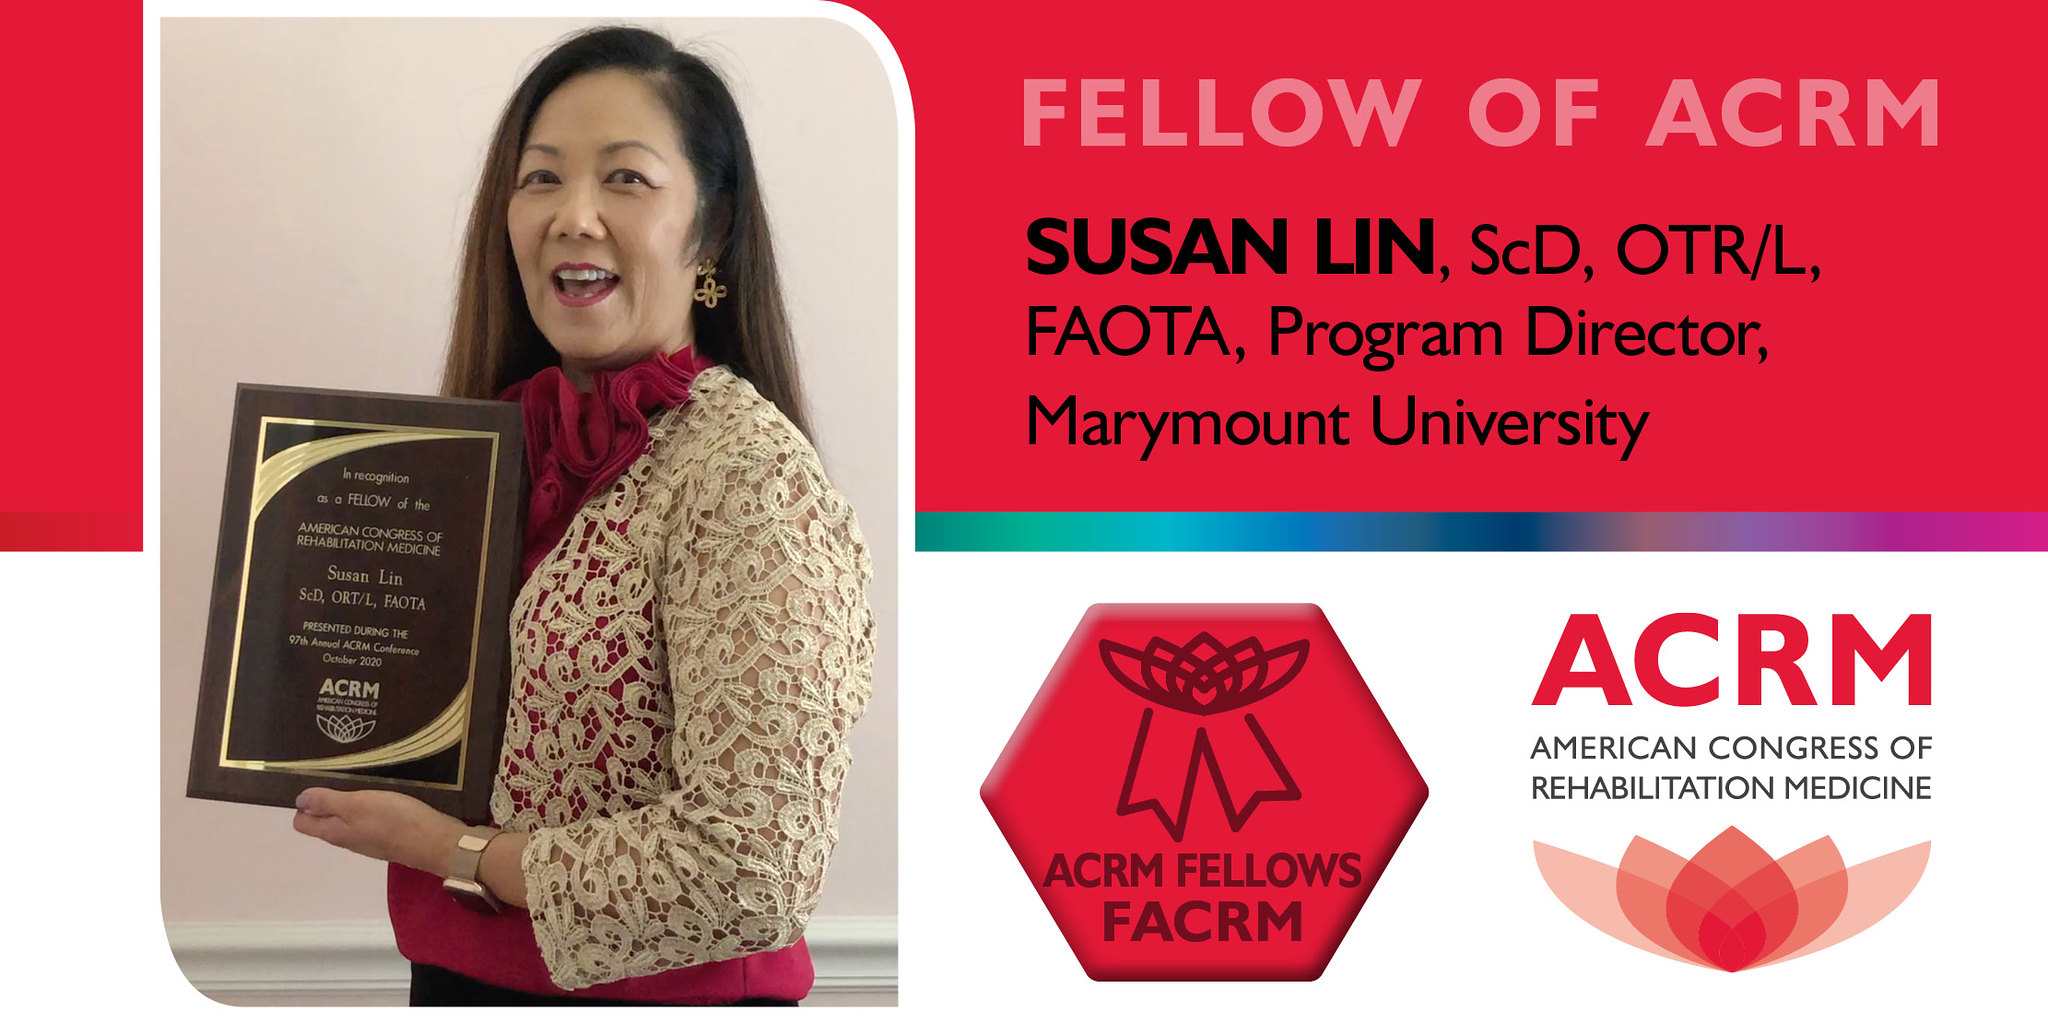 Susan Lin is a 2020 Fellow of ACRM